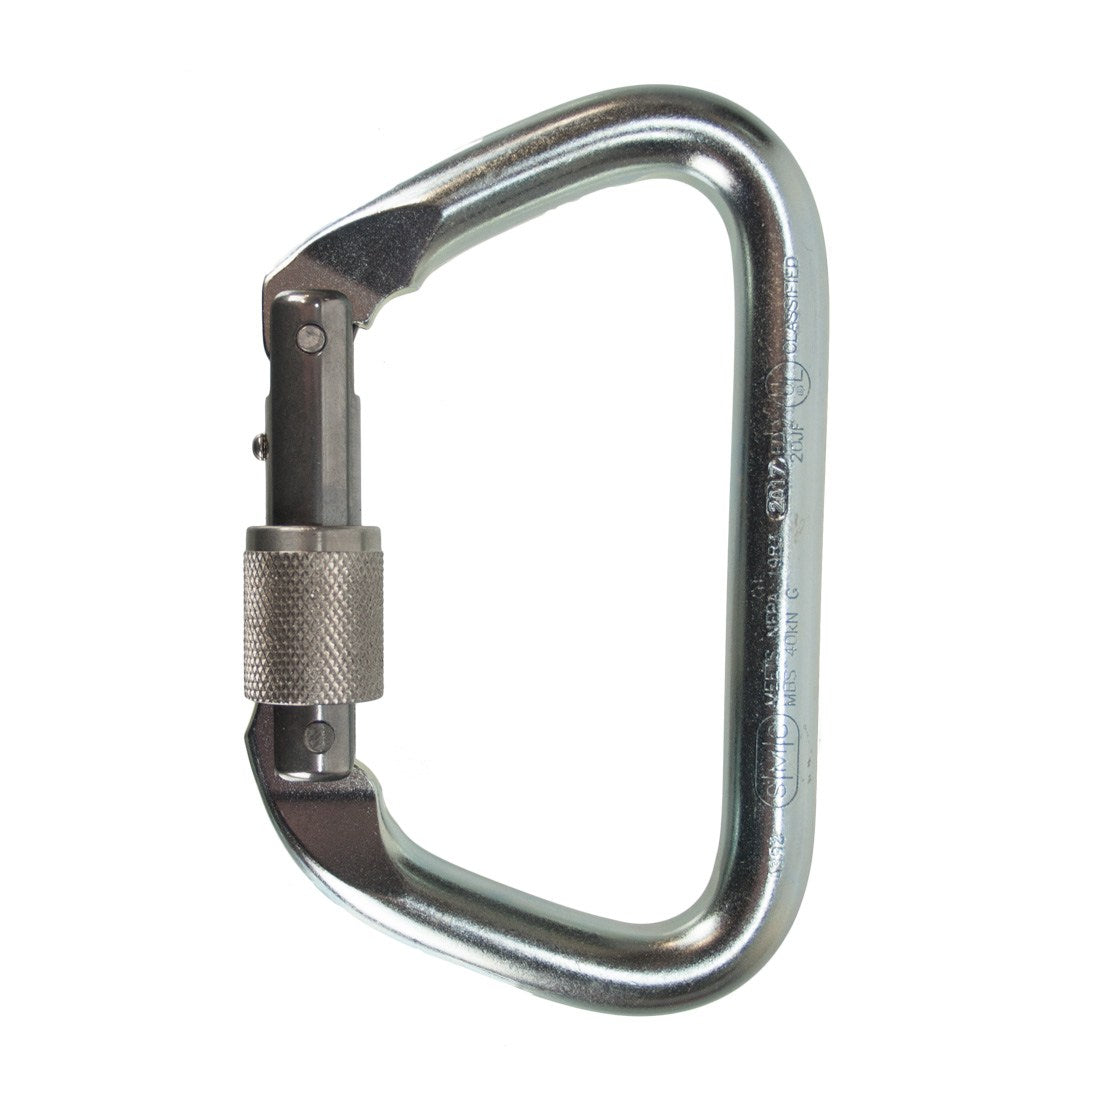 SMC Steel Locking Carabiner - Large - Left Side View